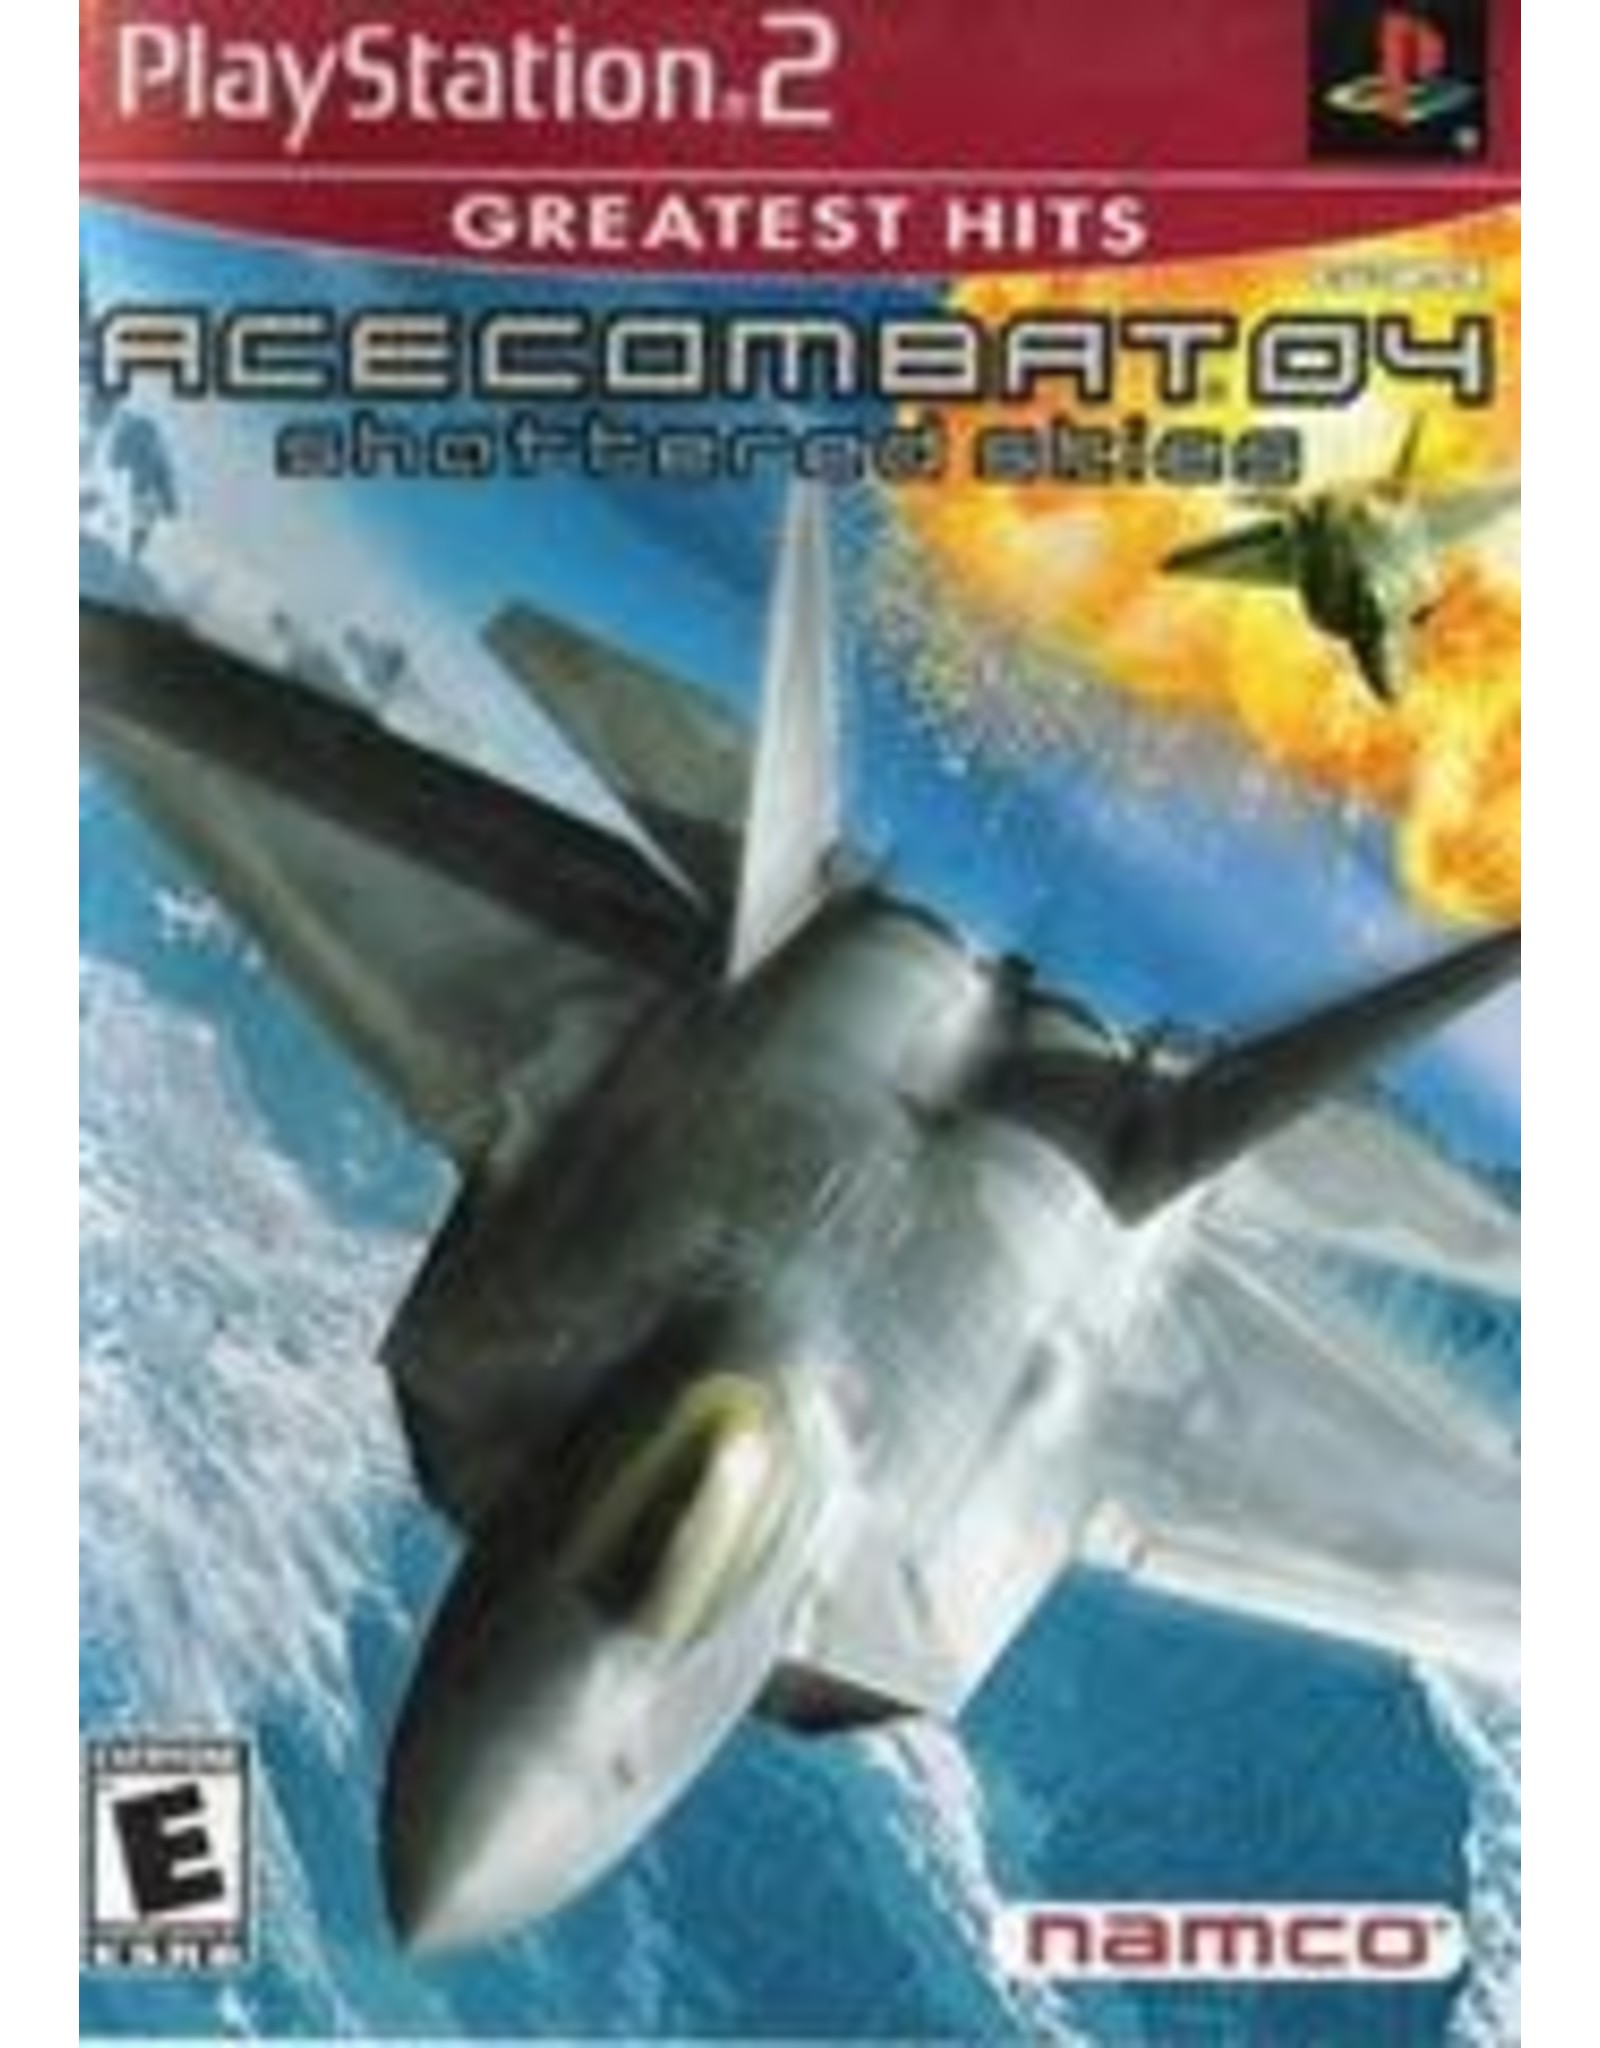 Playstation 2 Ace Combat 4 (Greatest Hits, CiB)